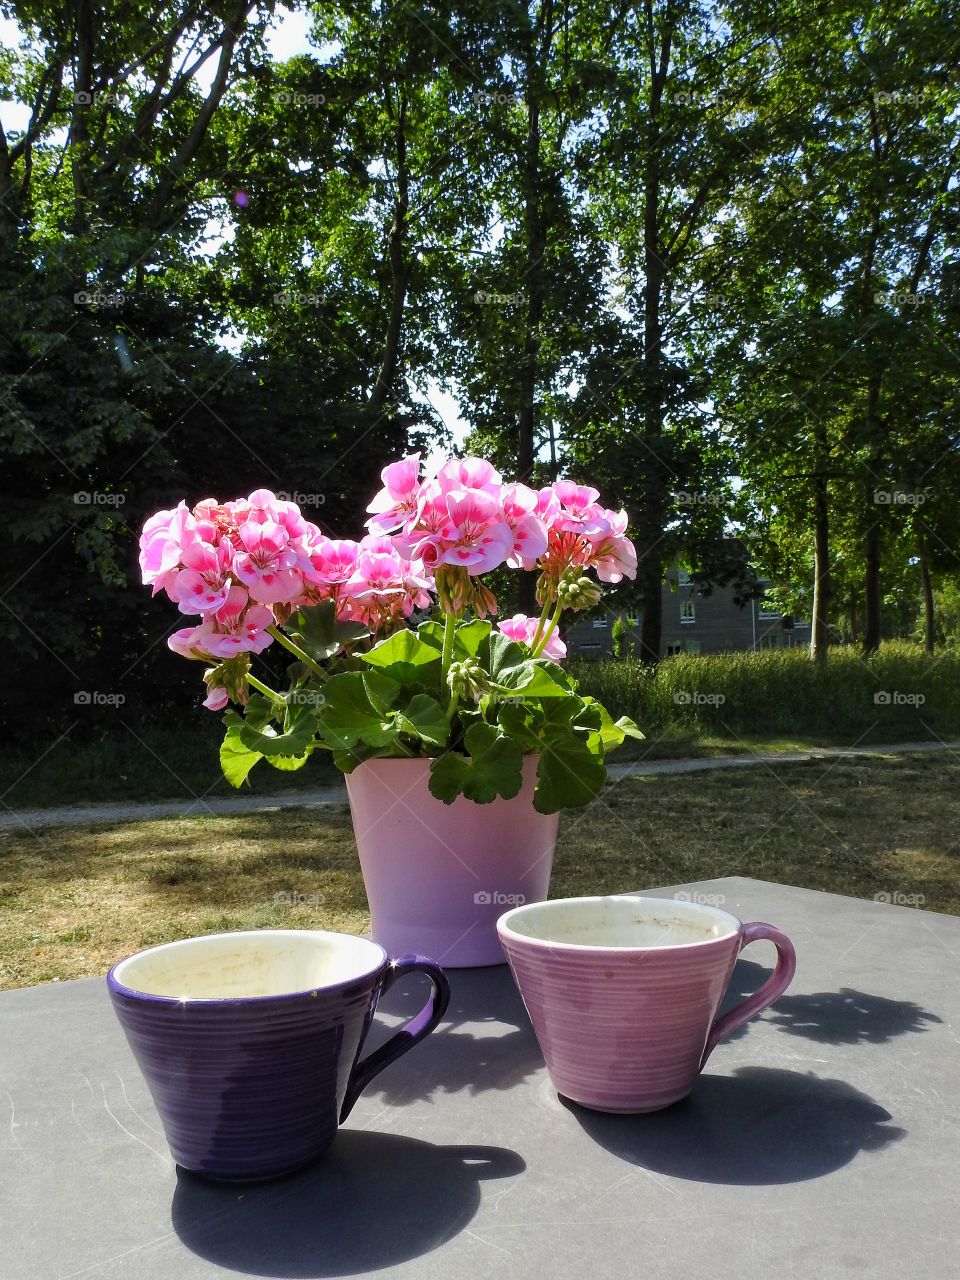 Coffee cup besides flower pot